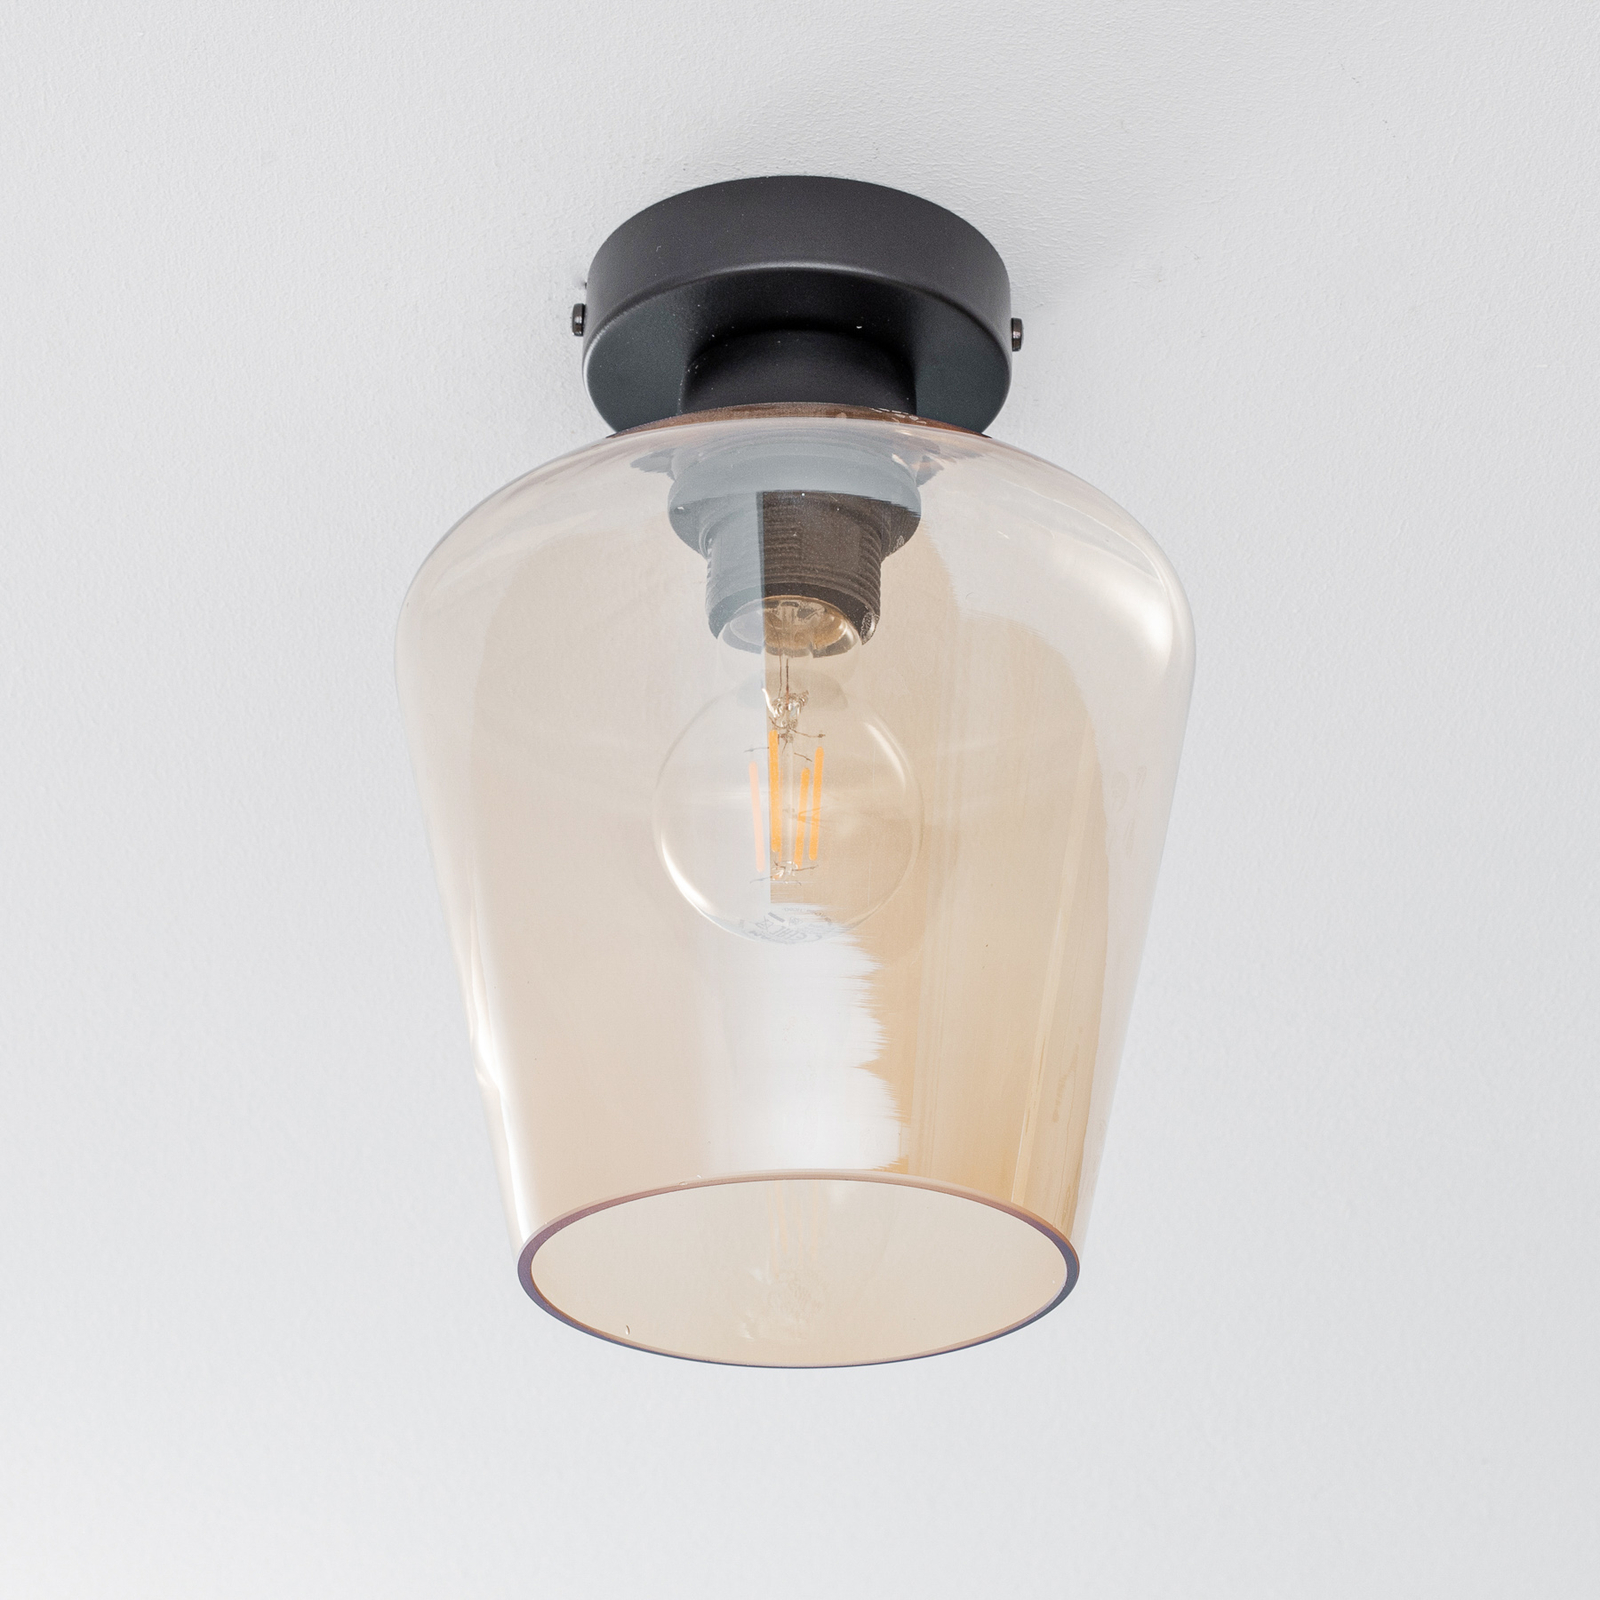 Santiago ceiling light, one-bulb, amber